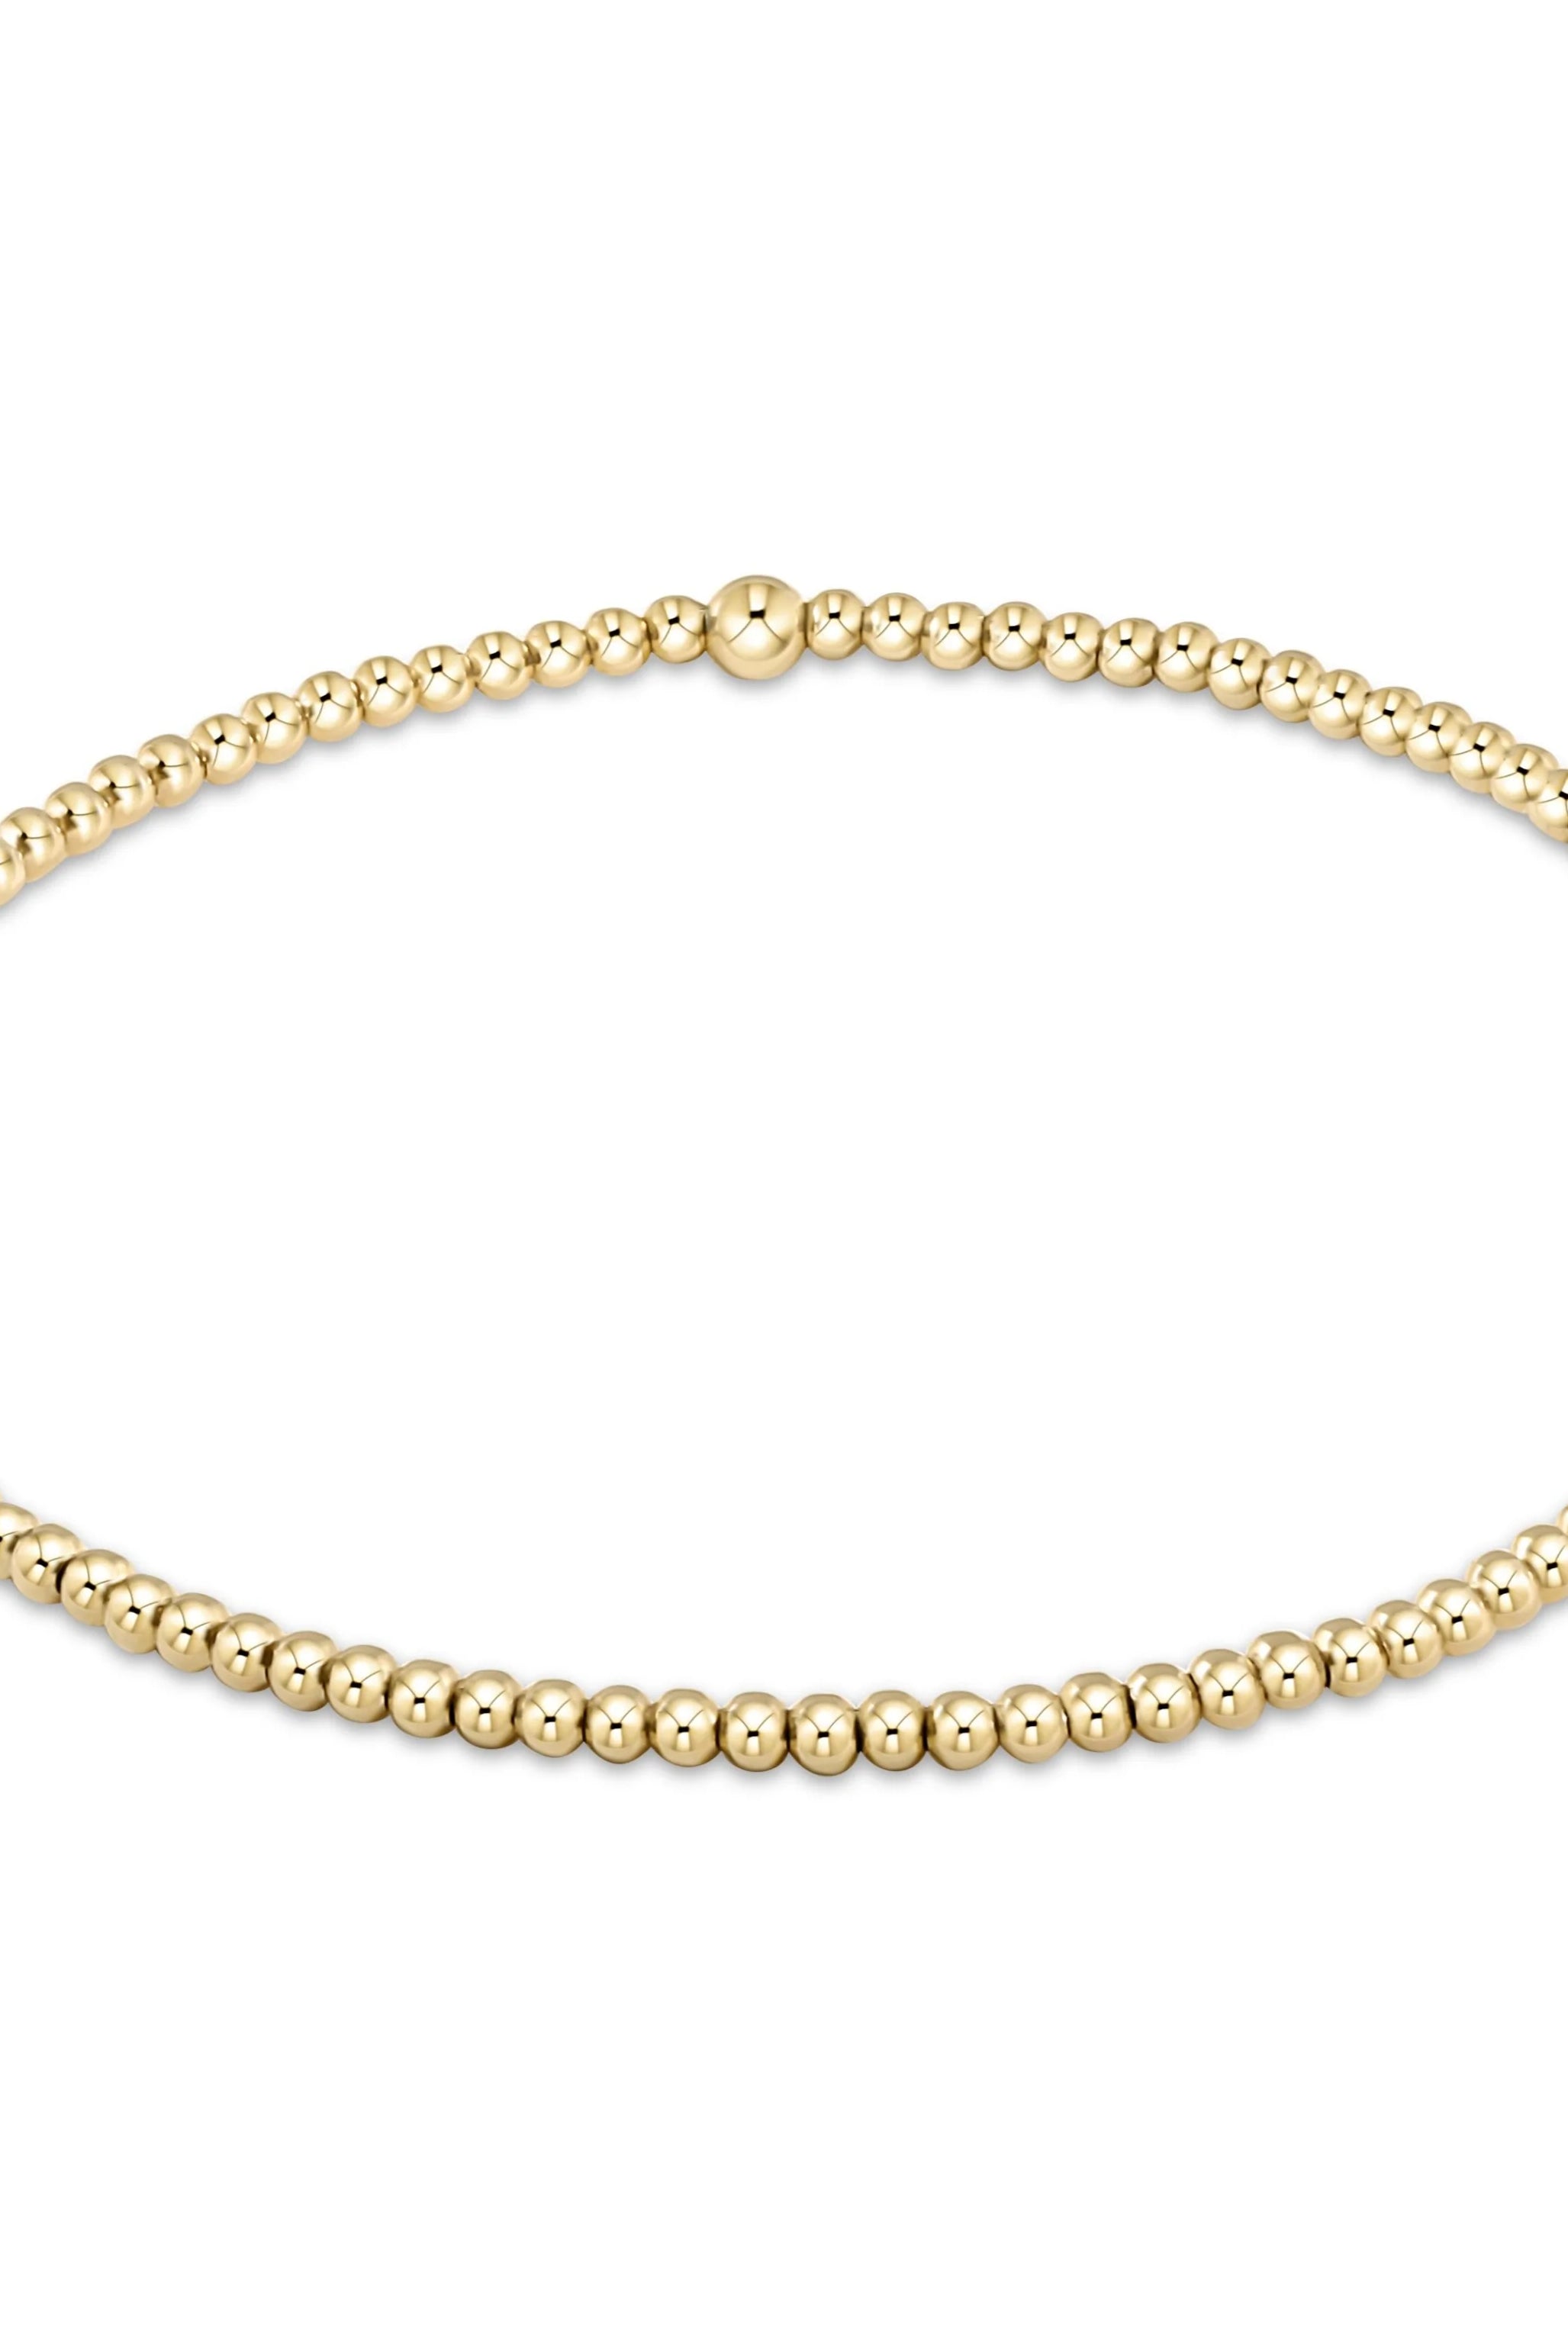 EXTENDS Classic Gold 2mm Bracelet-Bracelets-eNewton-The Lovely Closet, Women's Fashion Boutique in Alexandria, KY